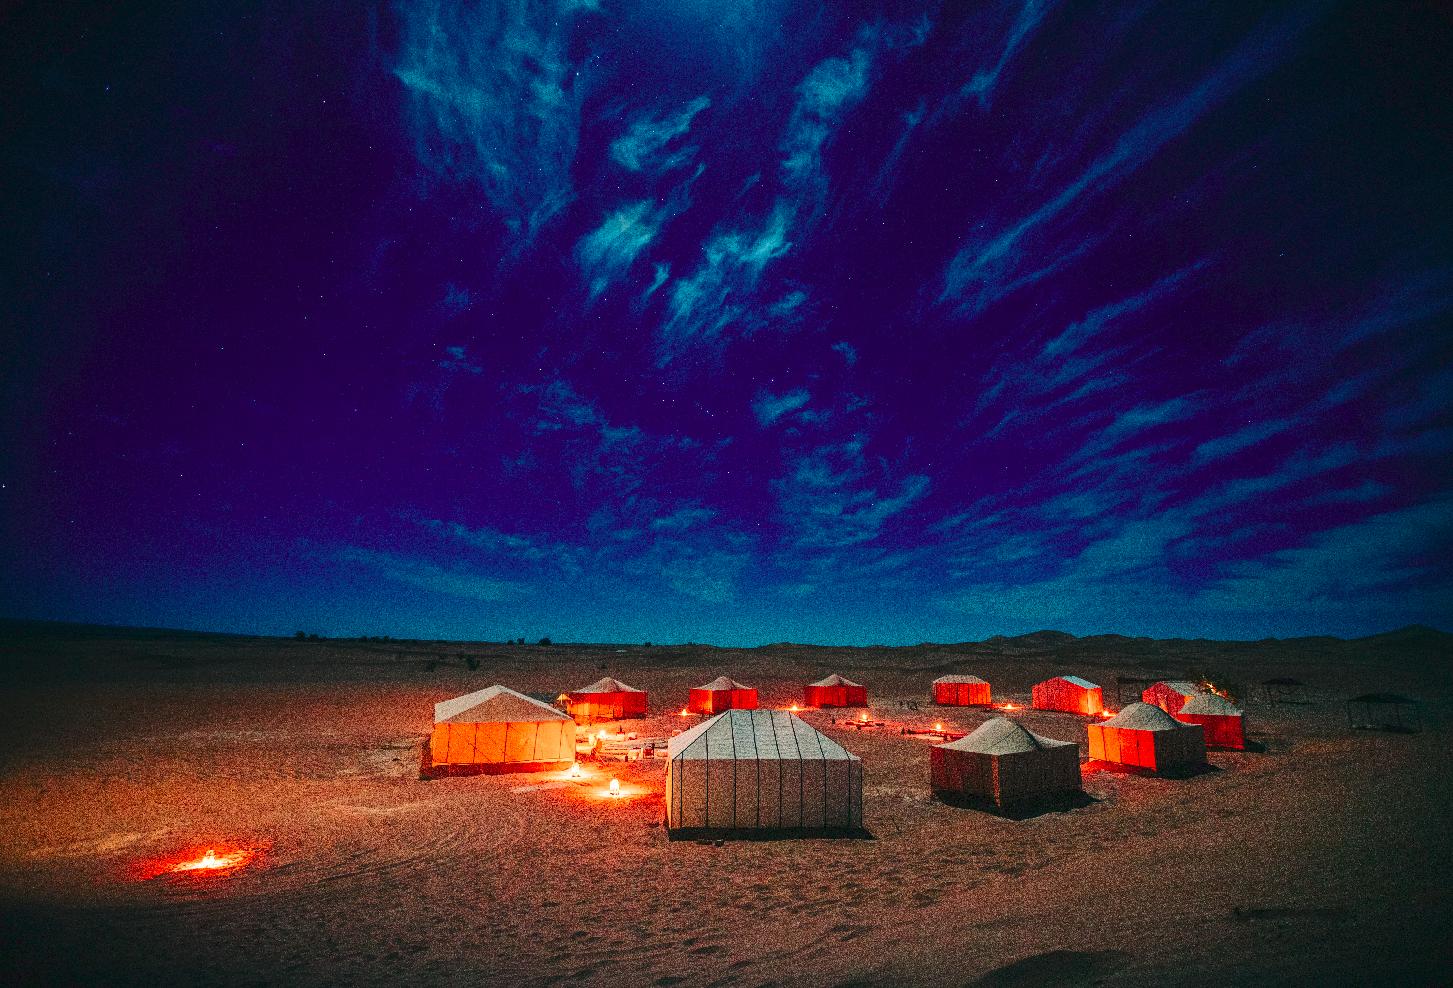 Sahara in night - 10 interesting facts